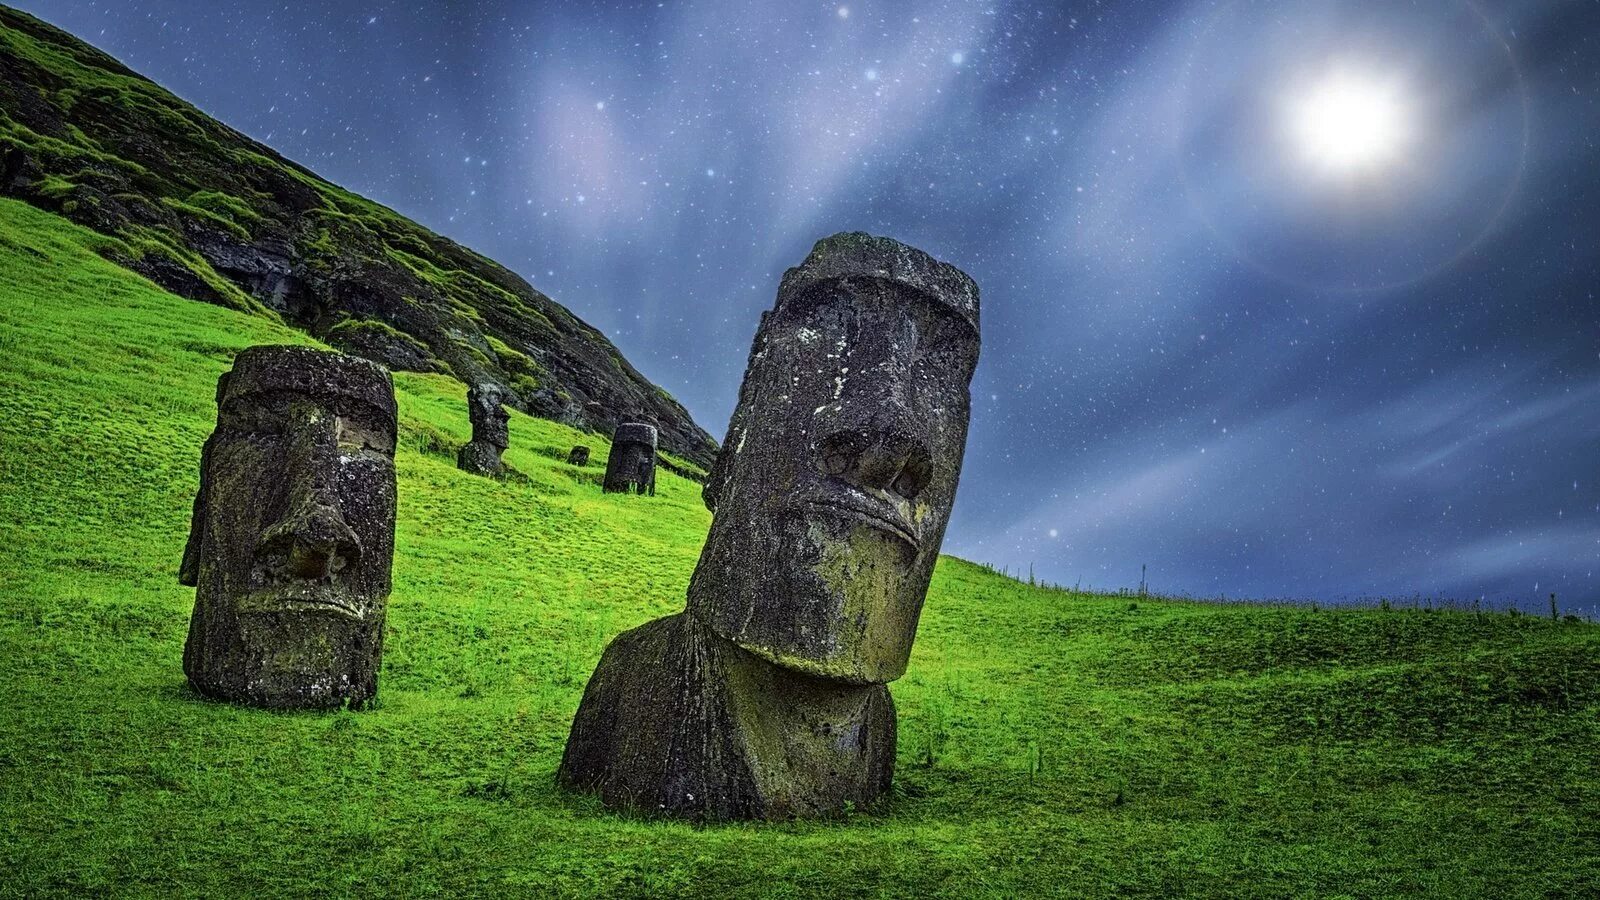 Памятники природы чили. Остров Пасхи статуи Моаи. Моаи (статуи острова Пасхи), Чили. Остров Пасхи истукан статуи чудес света. Моаи на острове Пасхи.